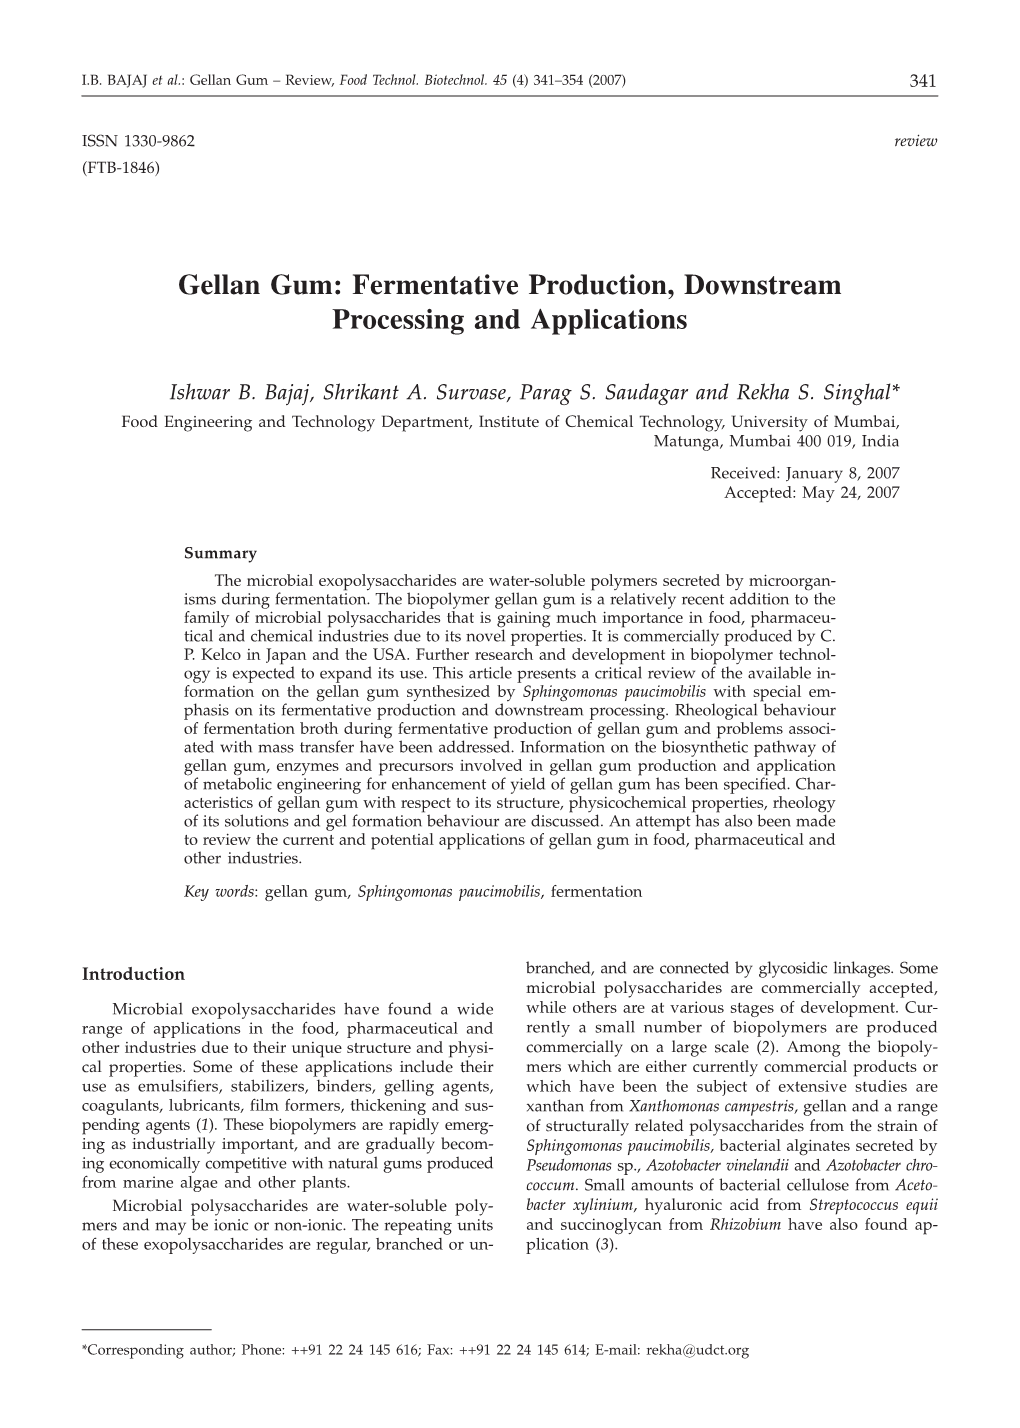 Gellan Gum: Fermentative Production, Downstream Processing and Applications